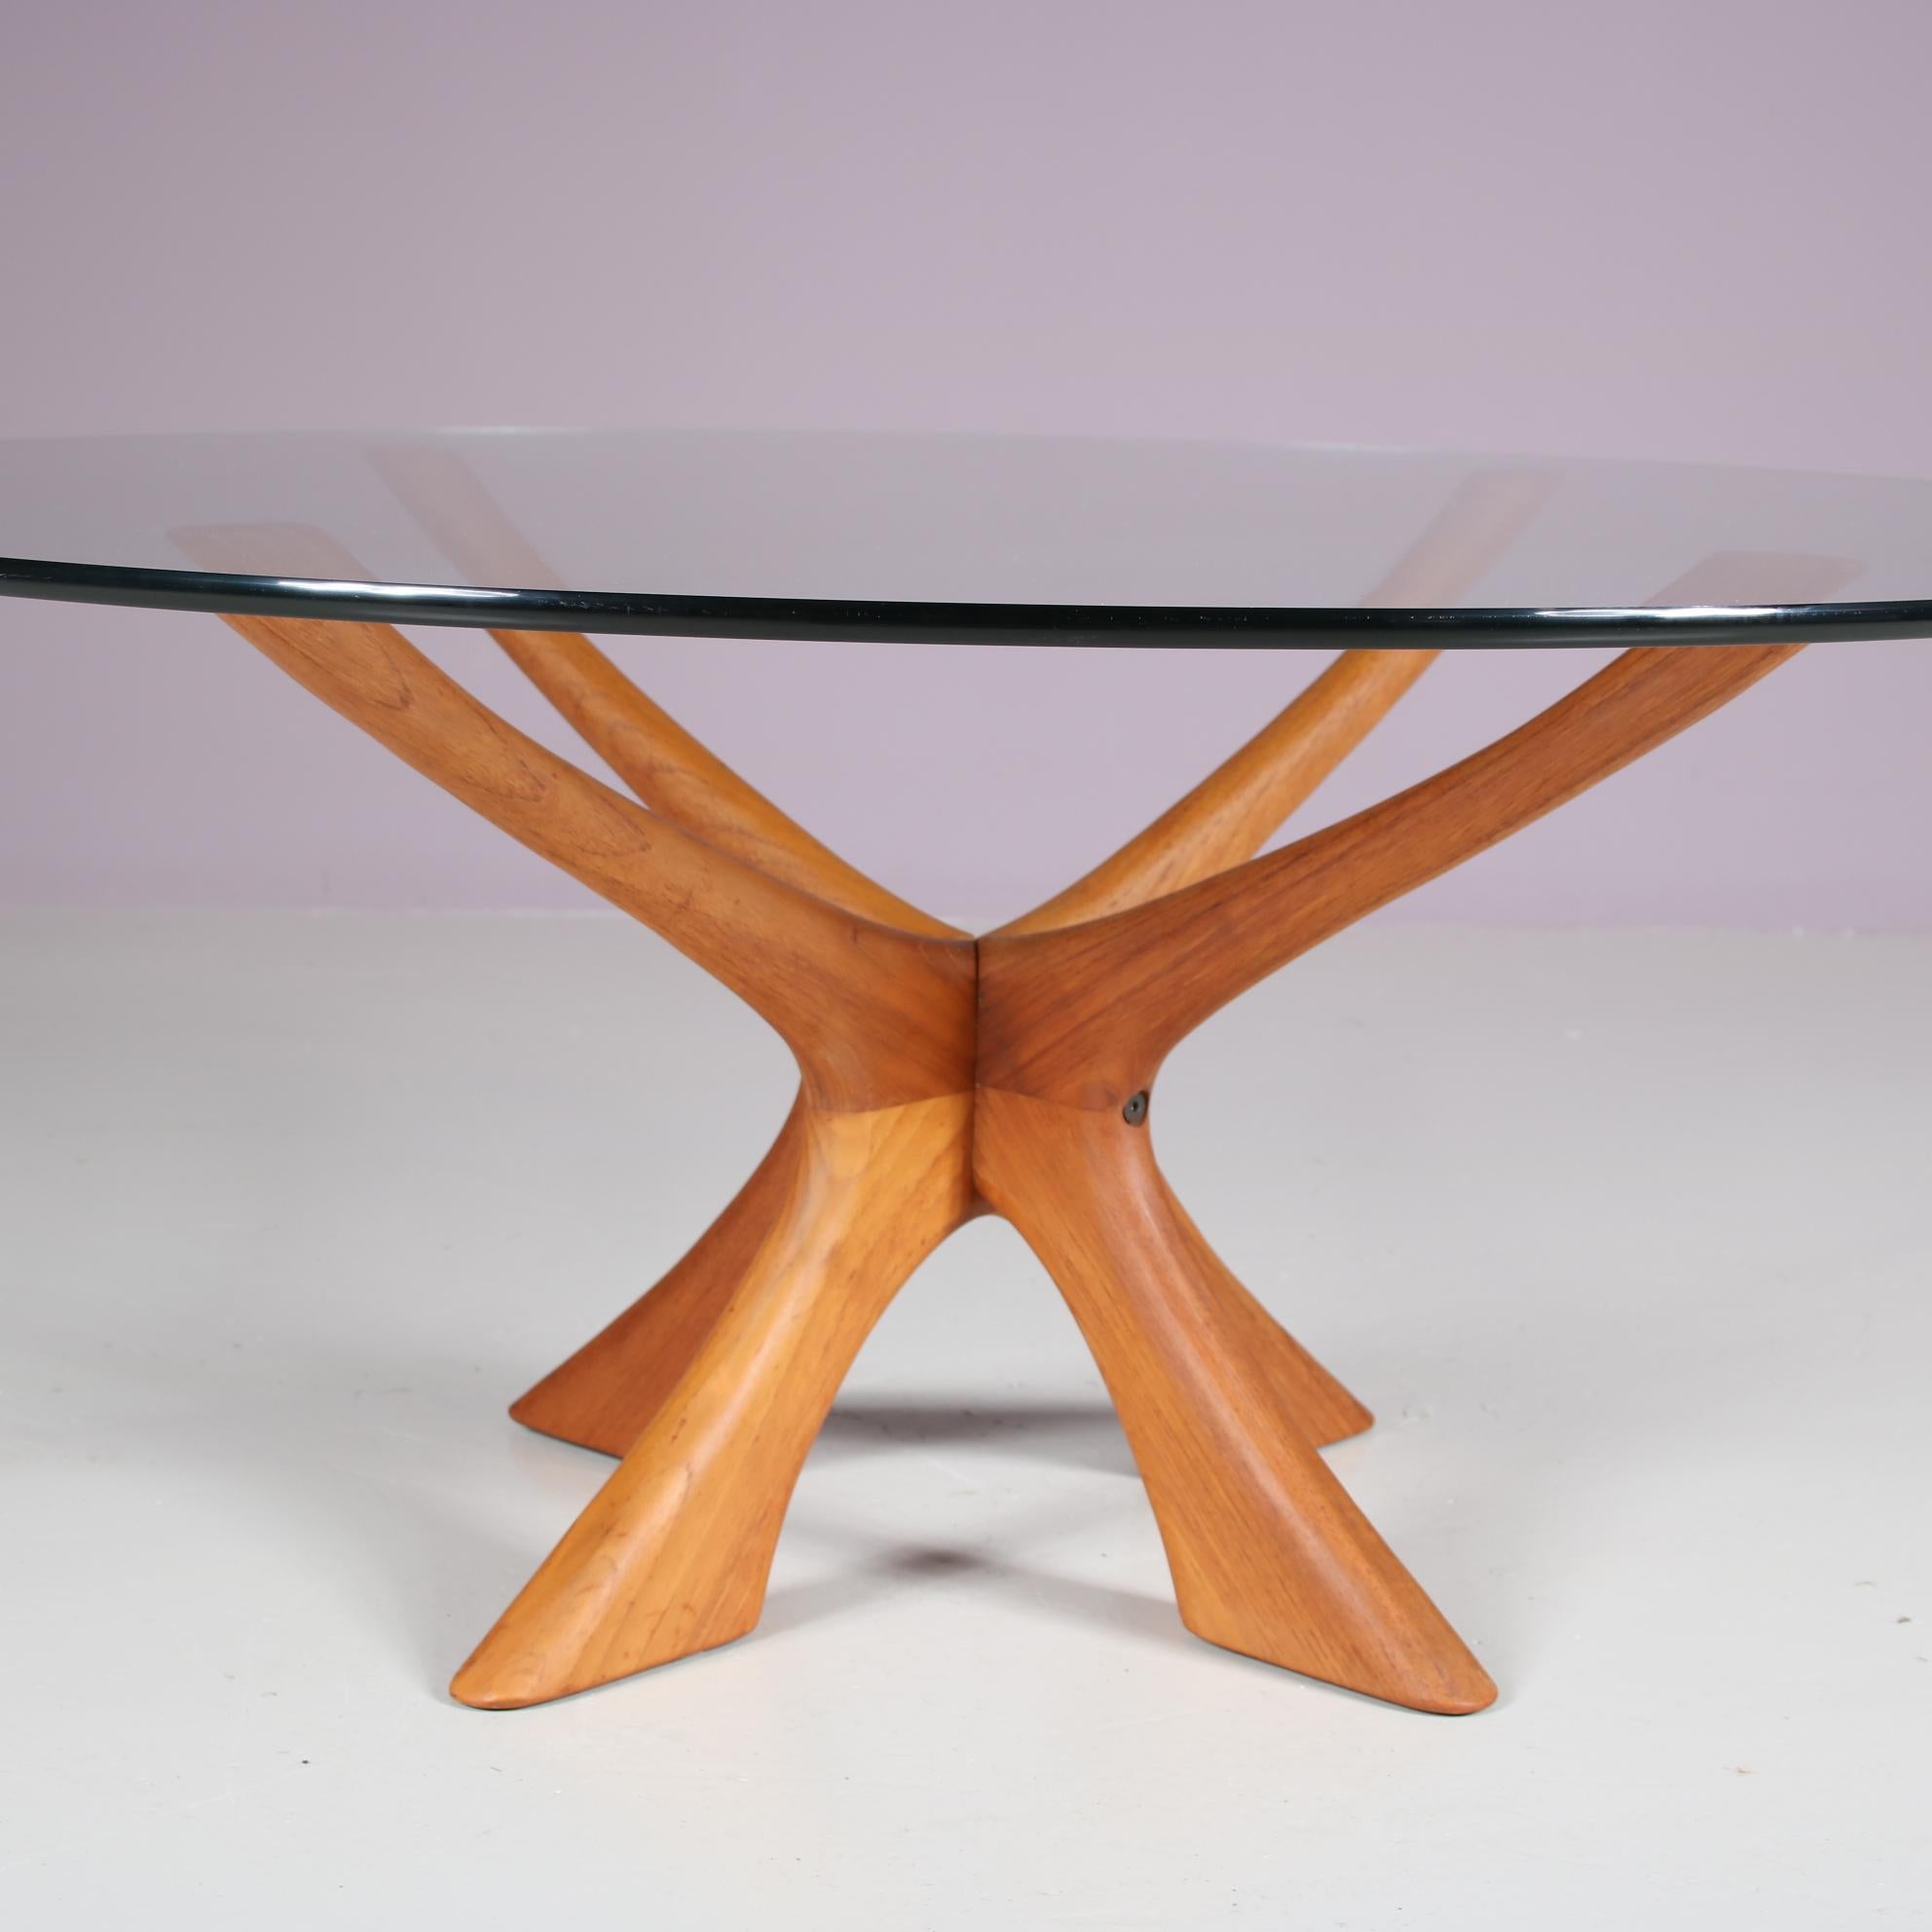 Scandinavian Modern “T118” Coffee Table by Illum Wikkelso for Niels Eilersen, Denmark, 1960 For Sale